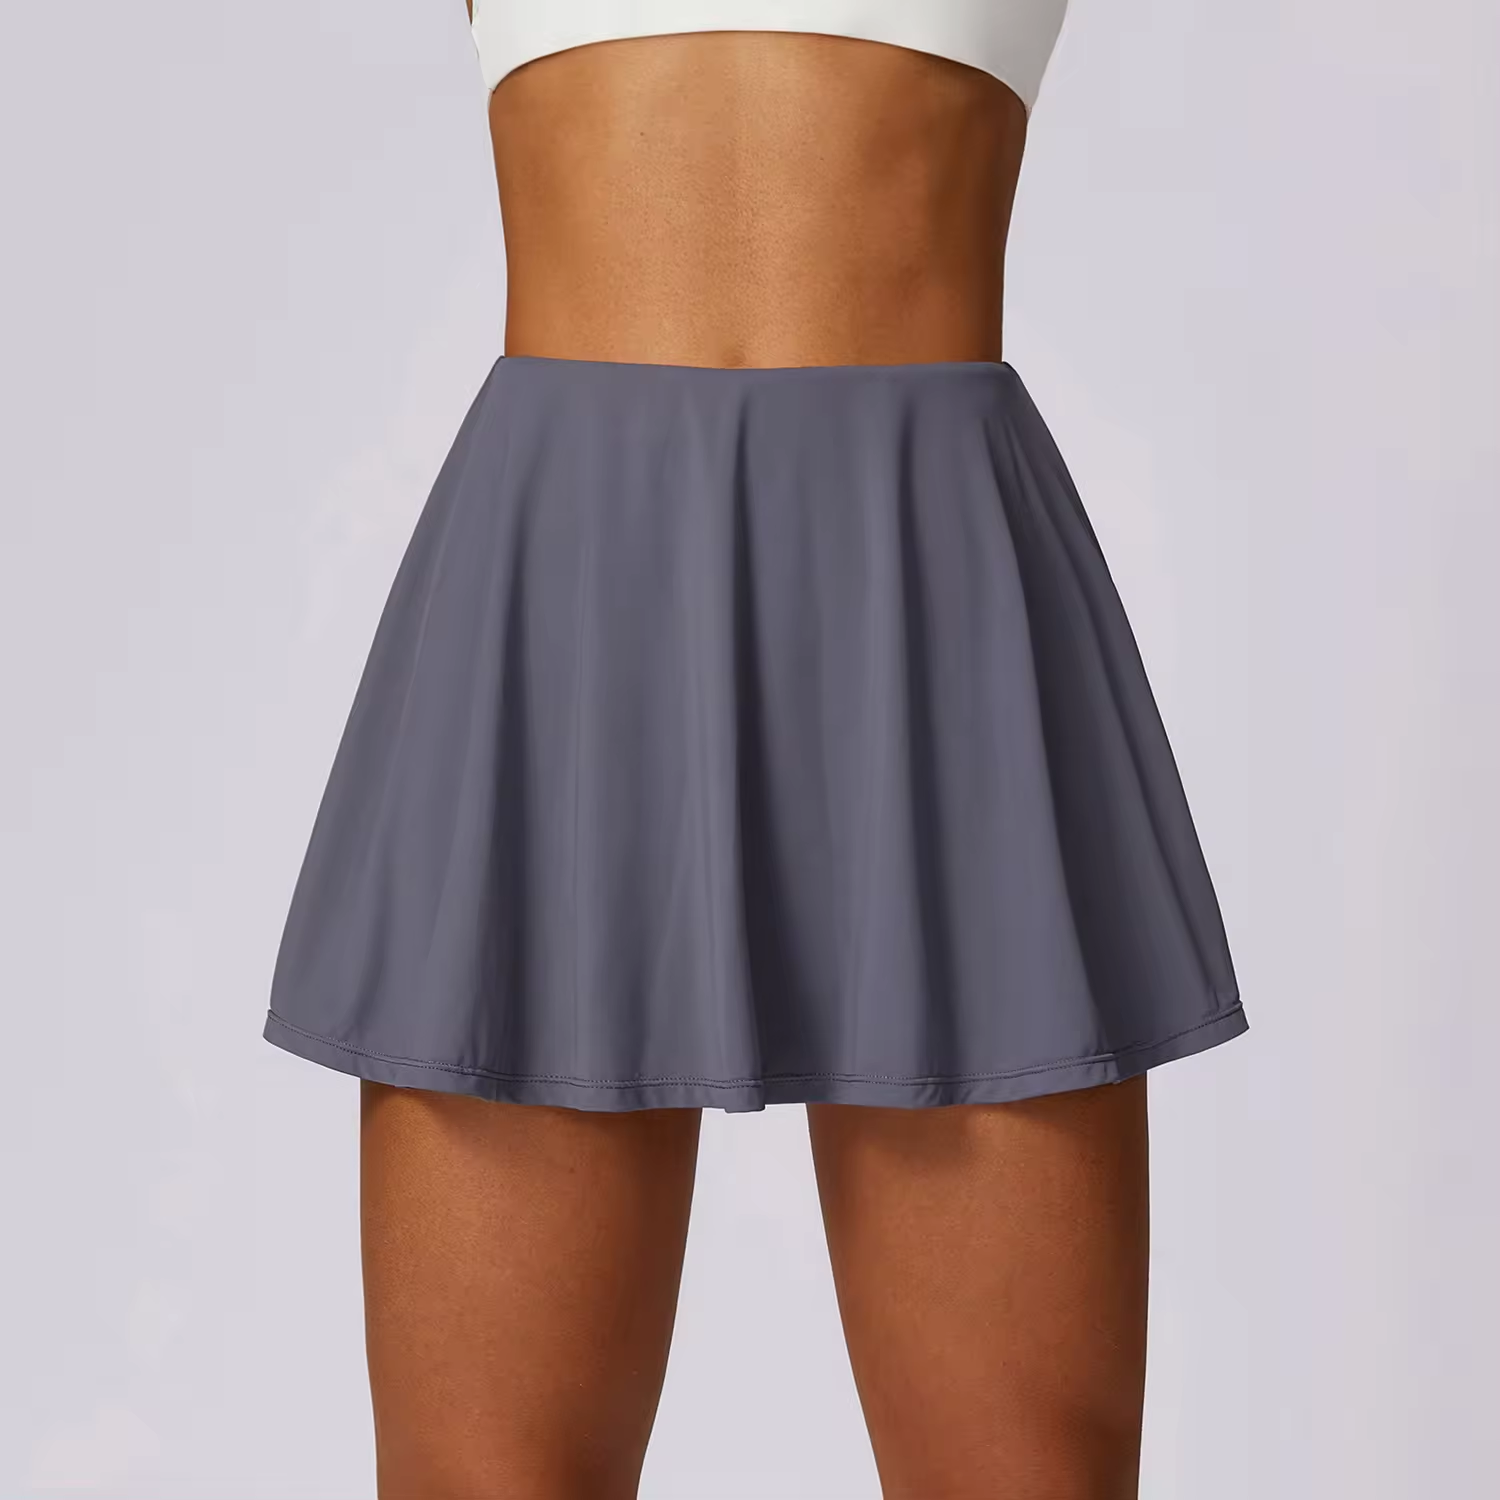 Stylish and Cool High-Waisted Tennis Skirt